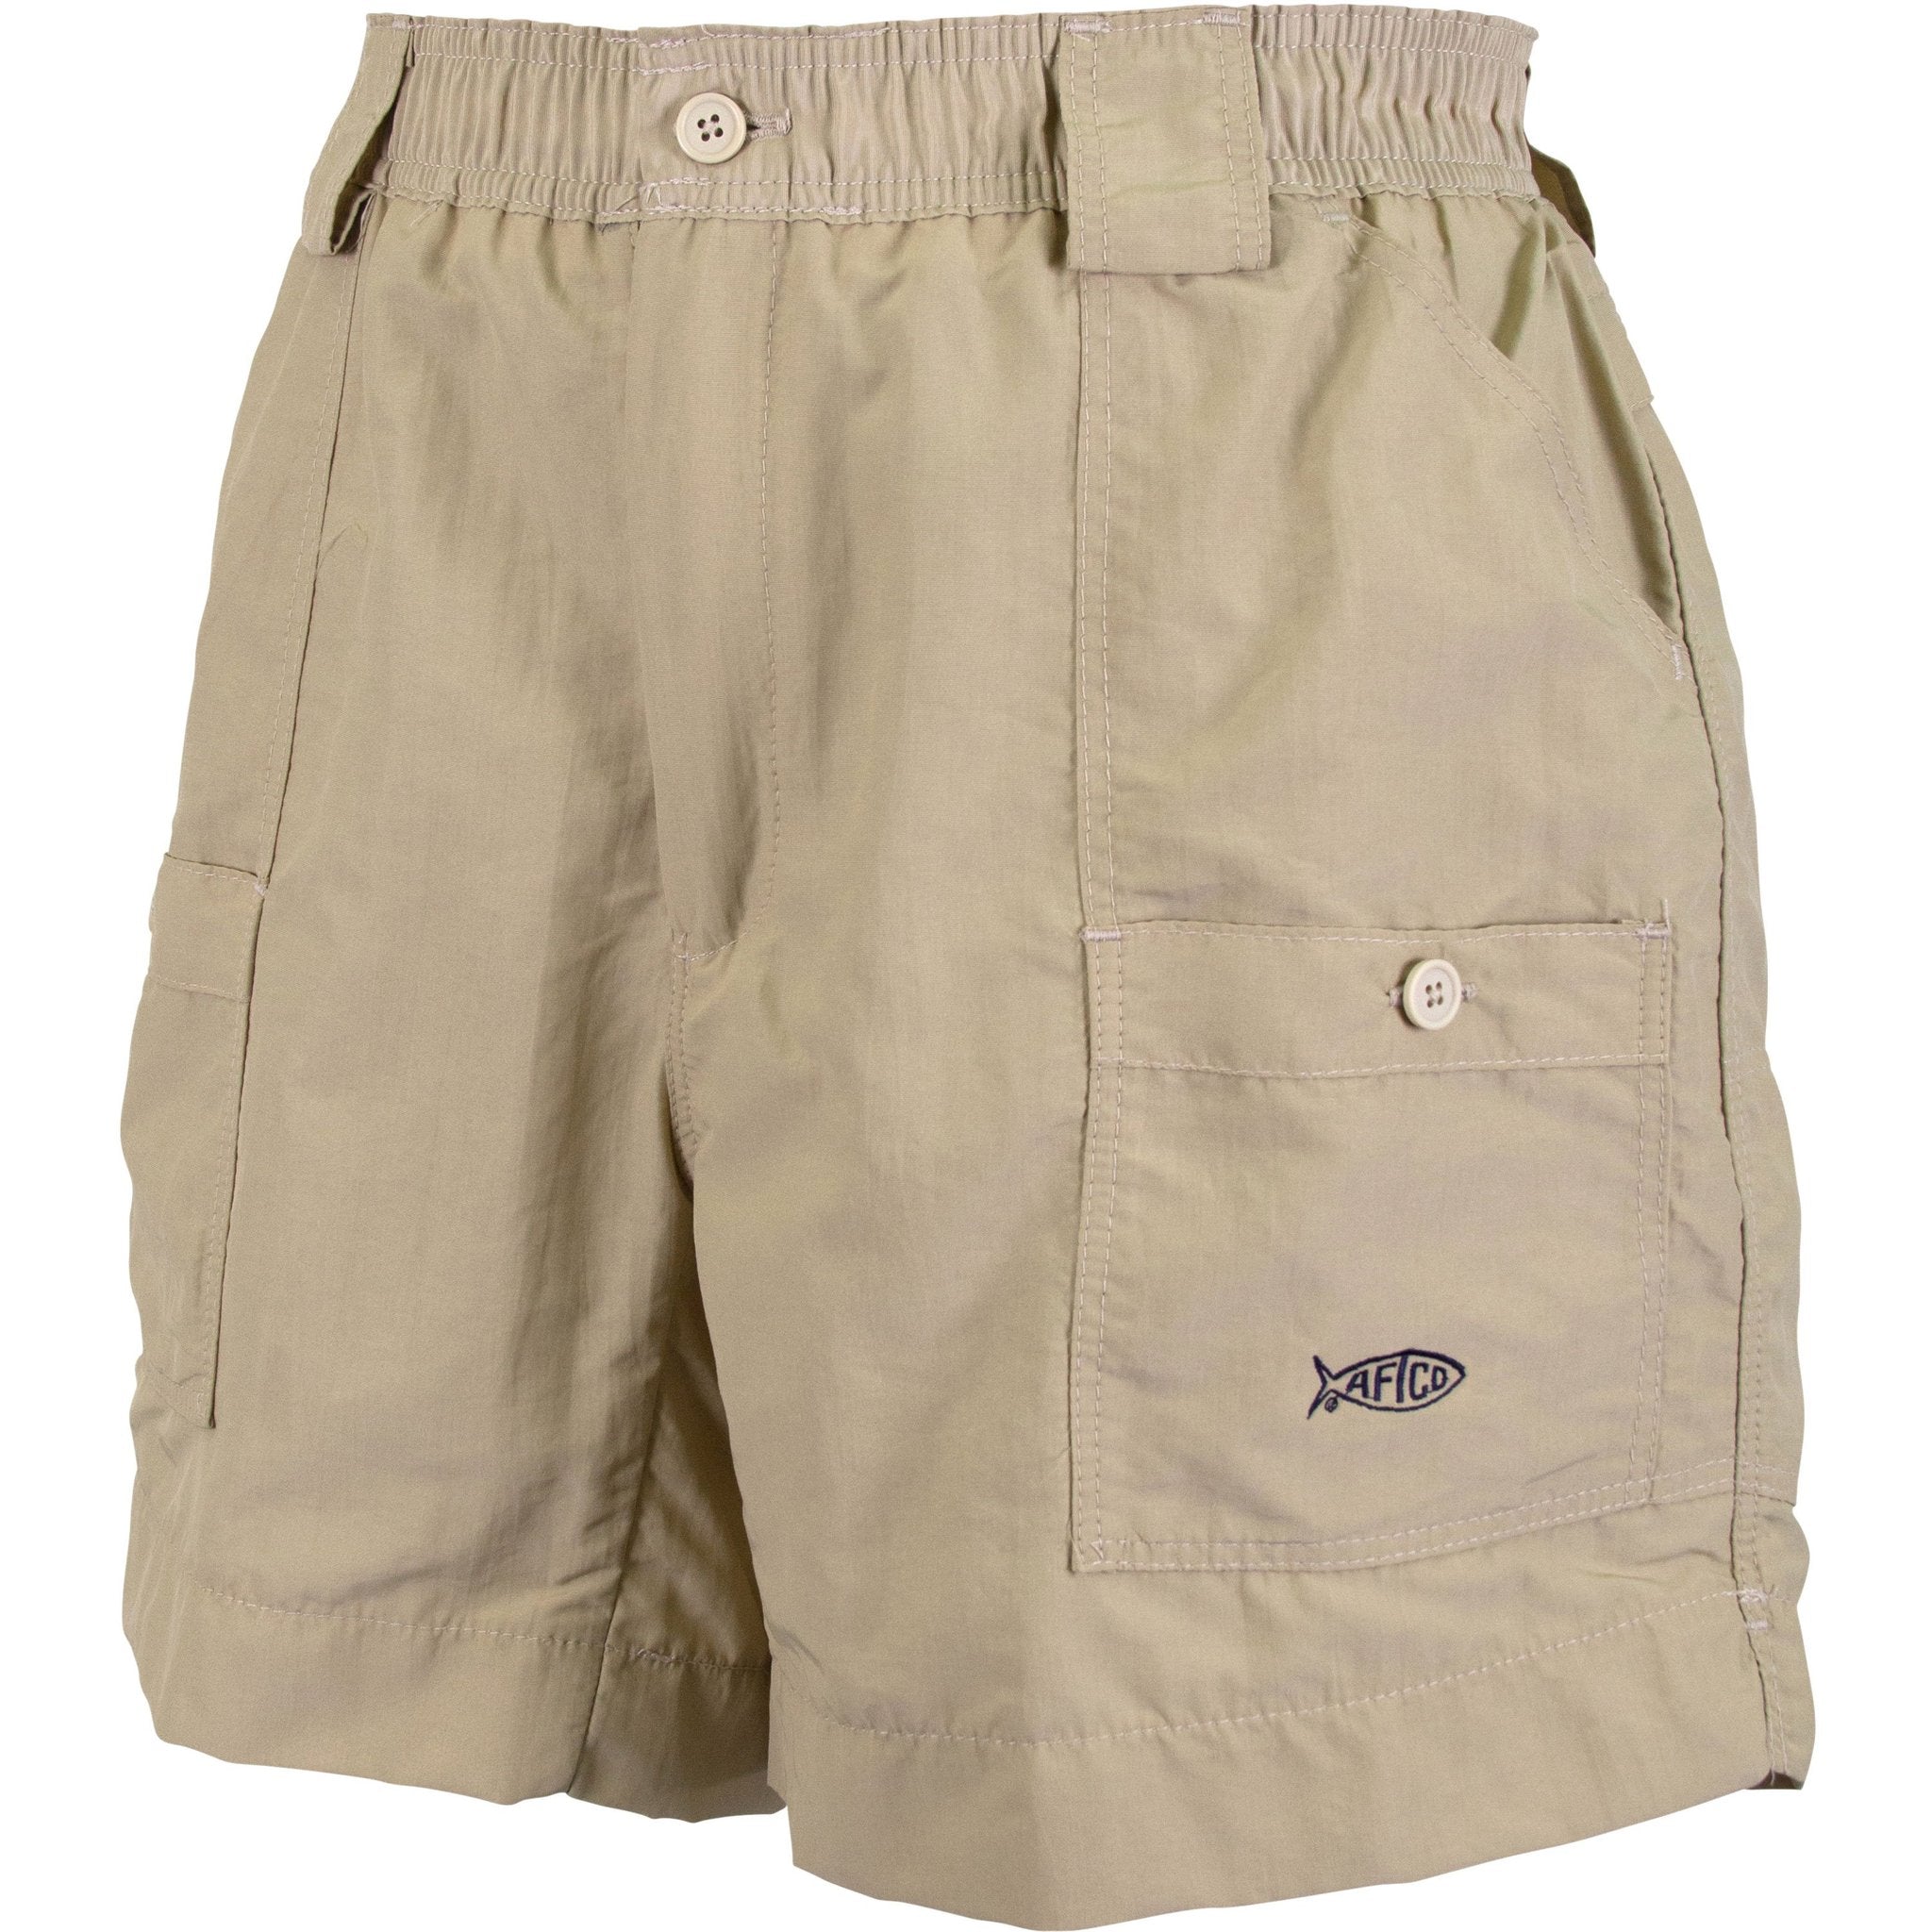 AFTCO Original Fishing Shorts (Khaki - 28)